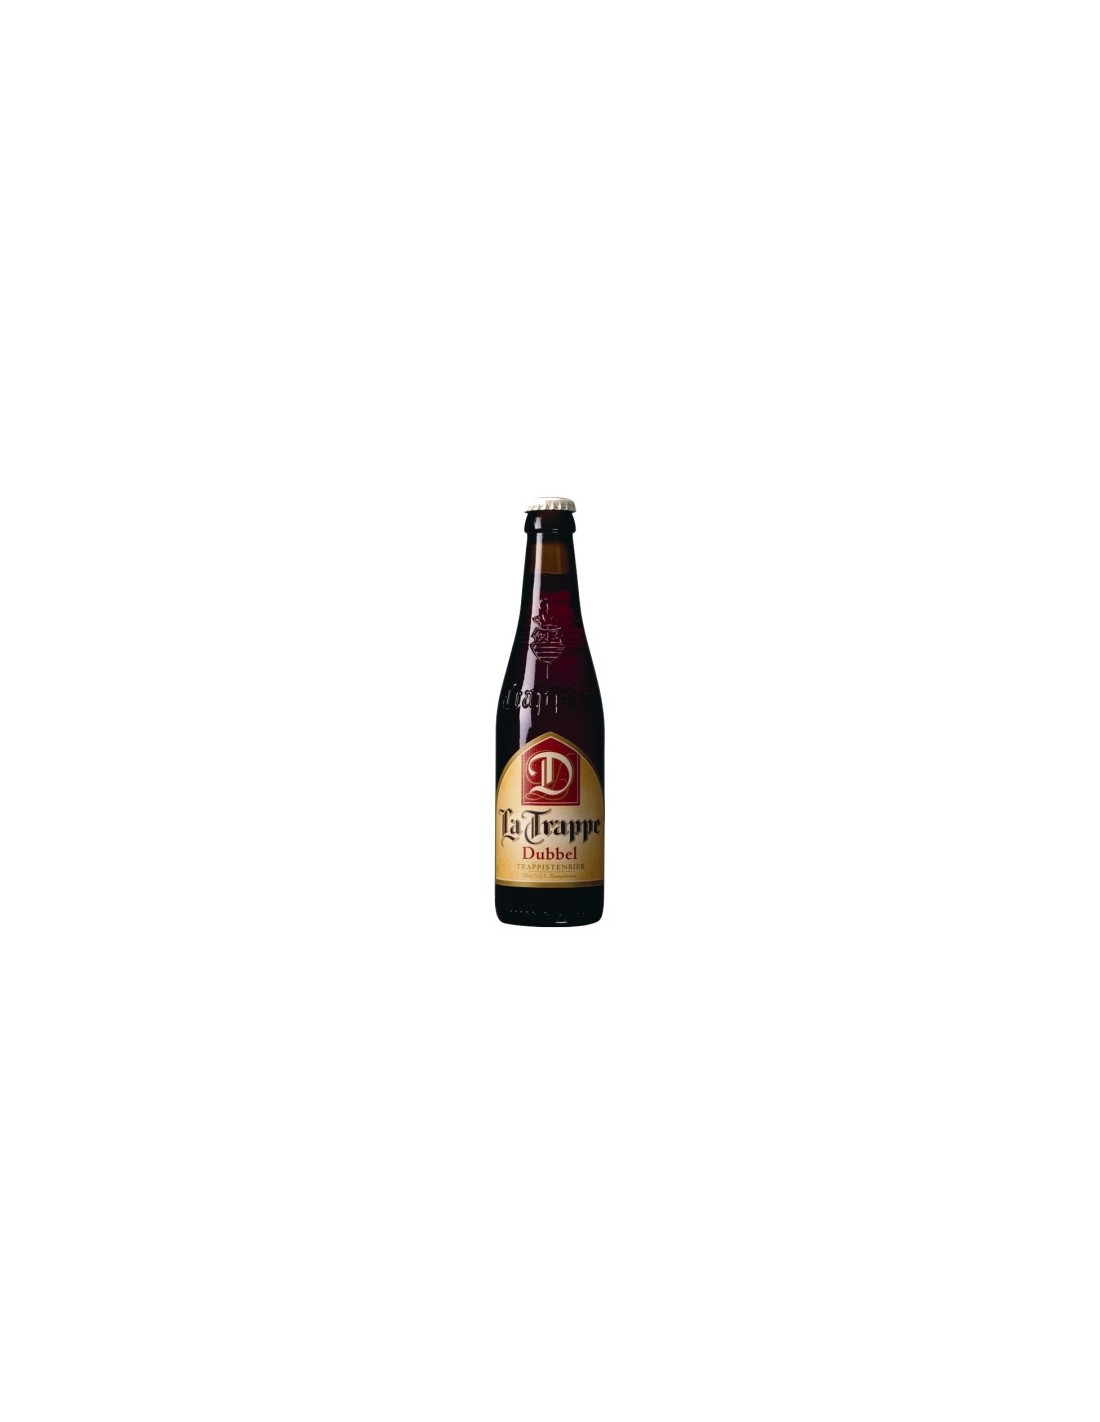 Bere bruna, filtrata La Trappe, 6.5% alc., 0.75L, Belgia alcooldiscount.ro